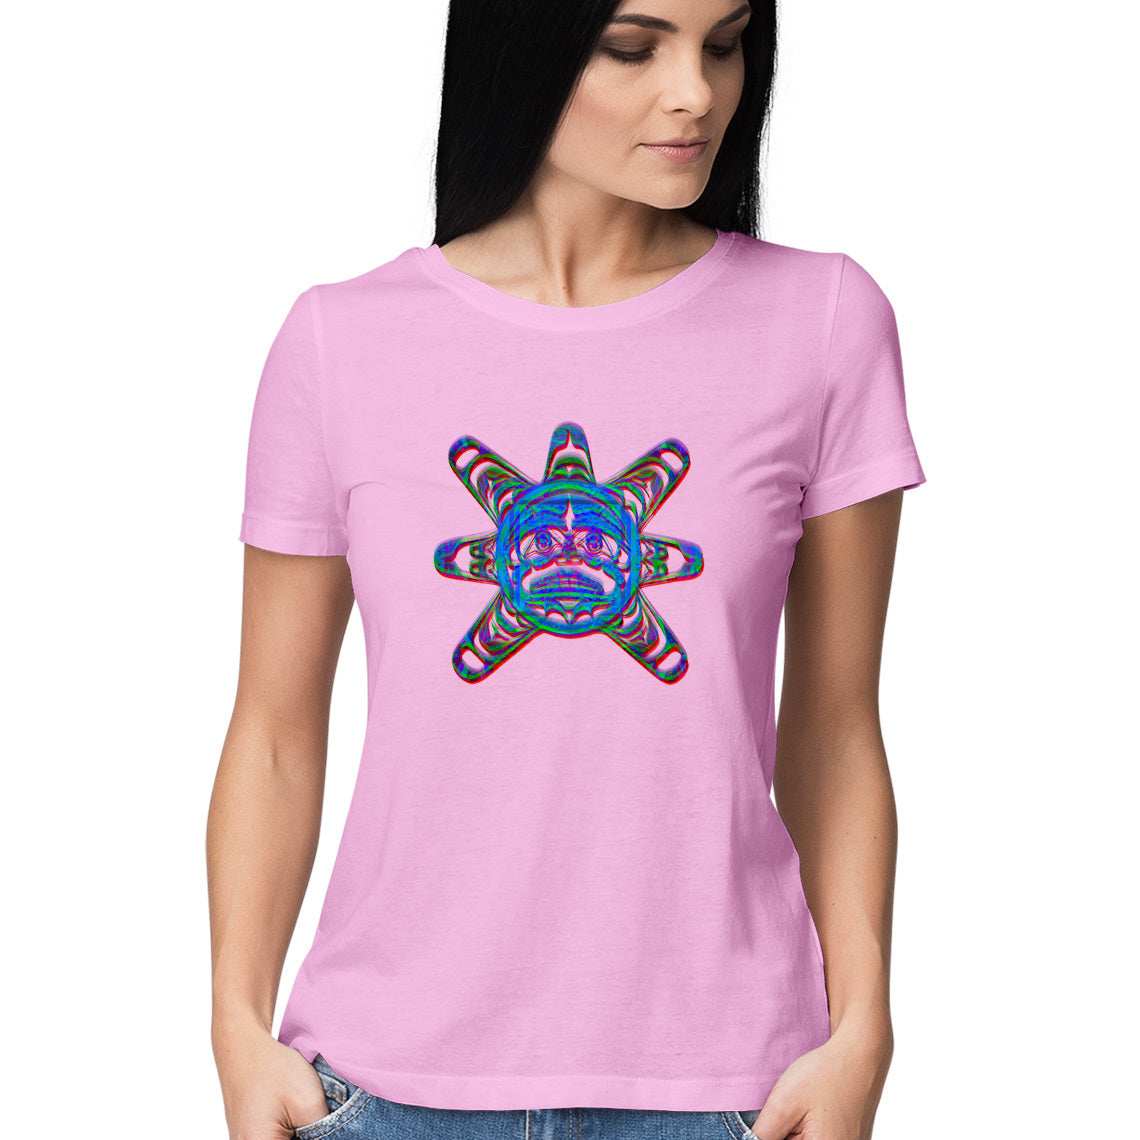 The Sun God of the Aztec Empire Women's T-Shirt - CBD Store India